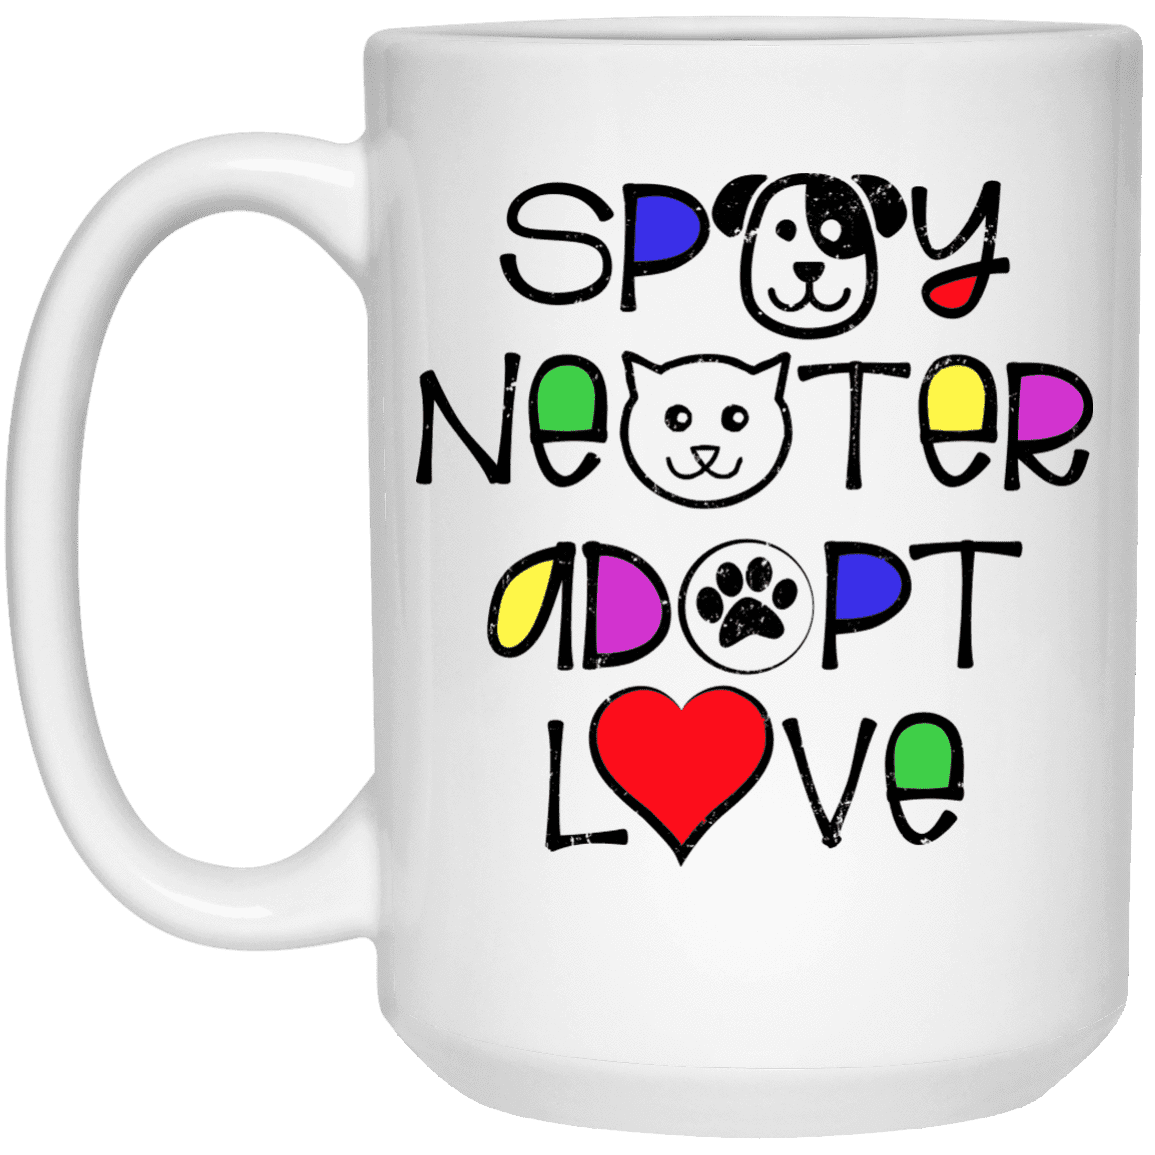 Spay Neuter Adopt Love - Mugs.